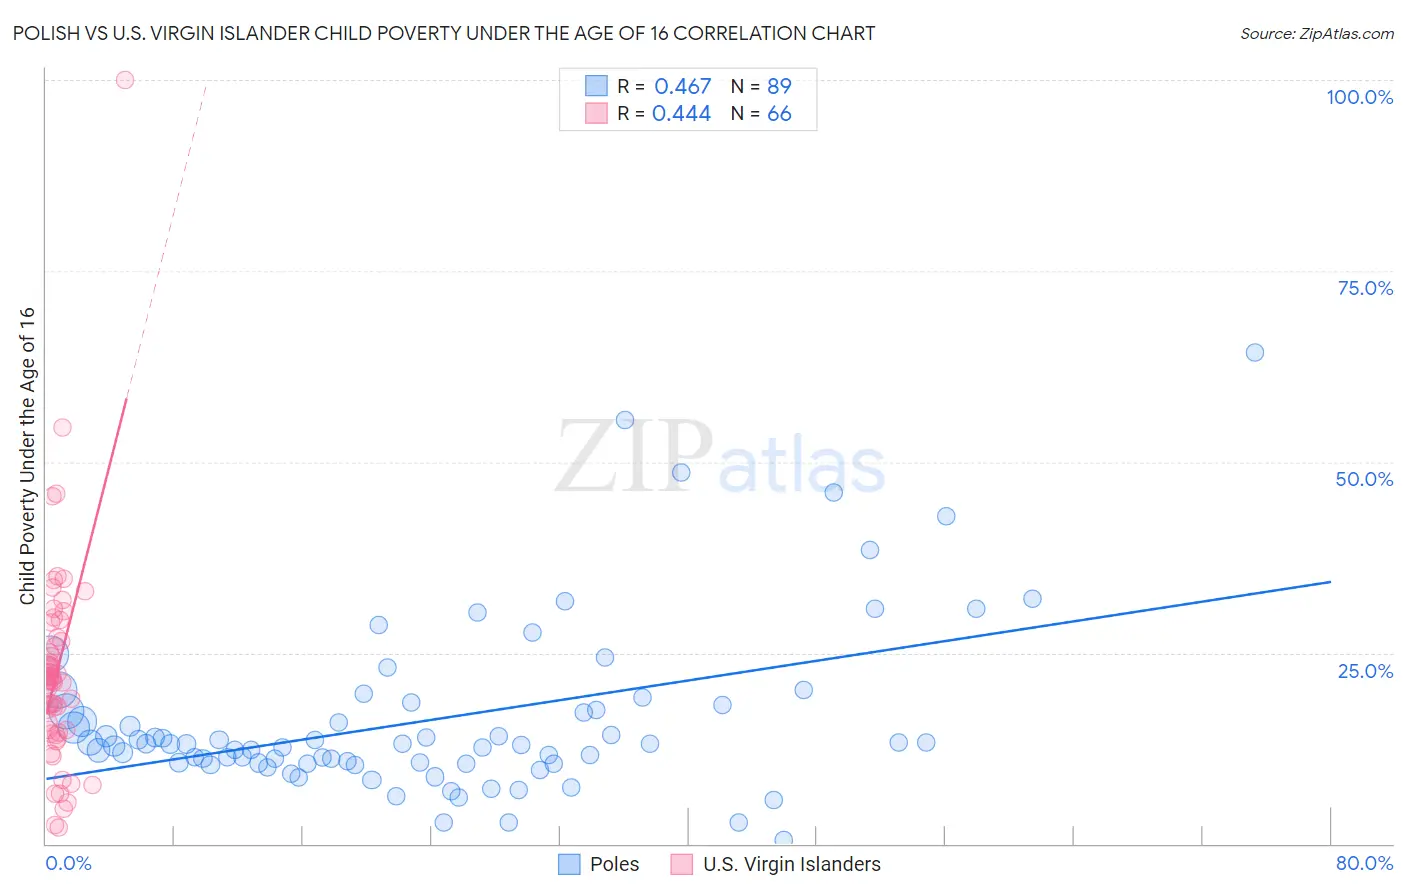 Polish vs U.S. Virgin Islander Child Poverty Under the Age of 16